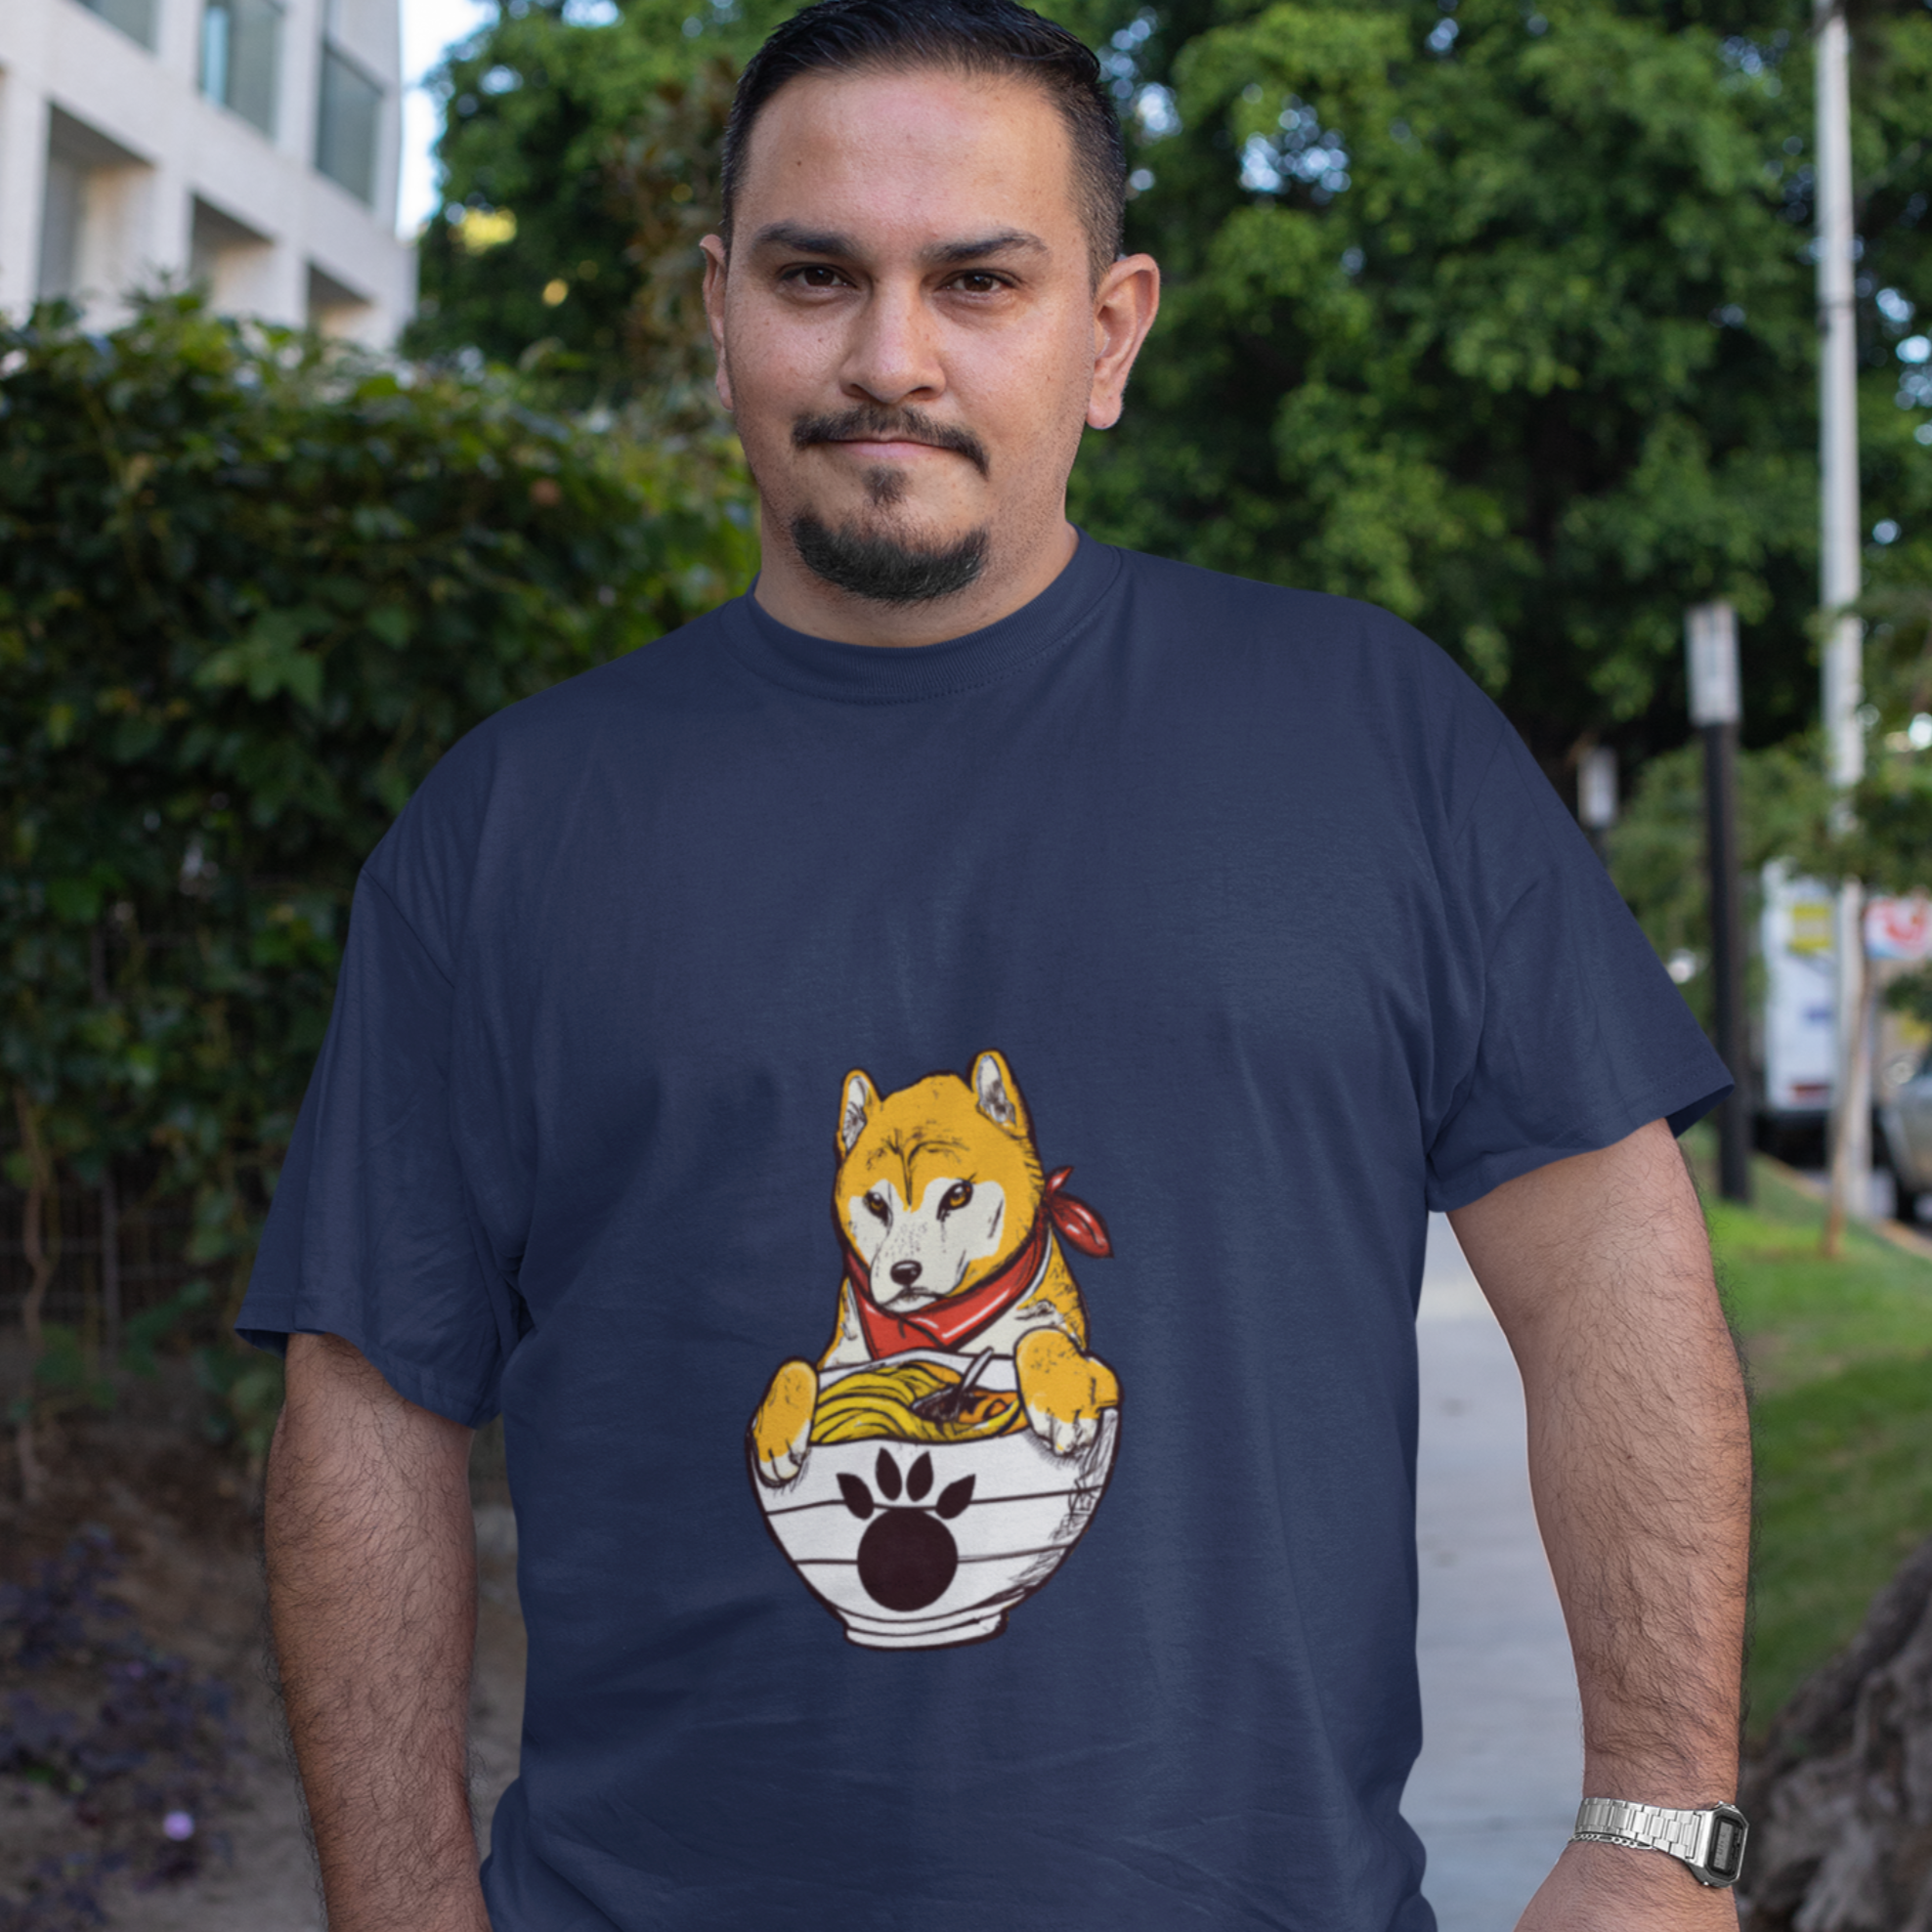 Ramen Shiba Inu T-Shirt: Japanese Foodie Shirt with Cute Dog Illustration and Ramen Art